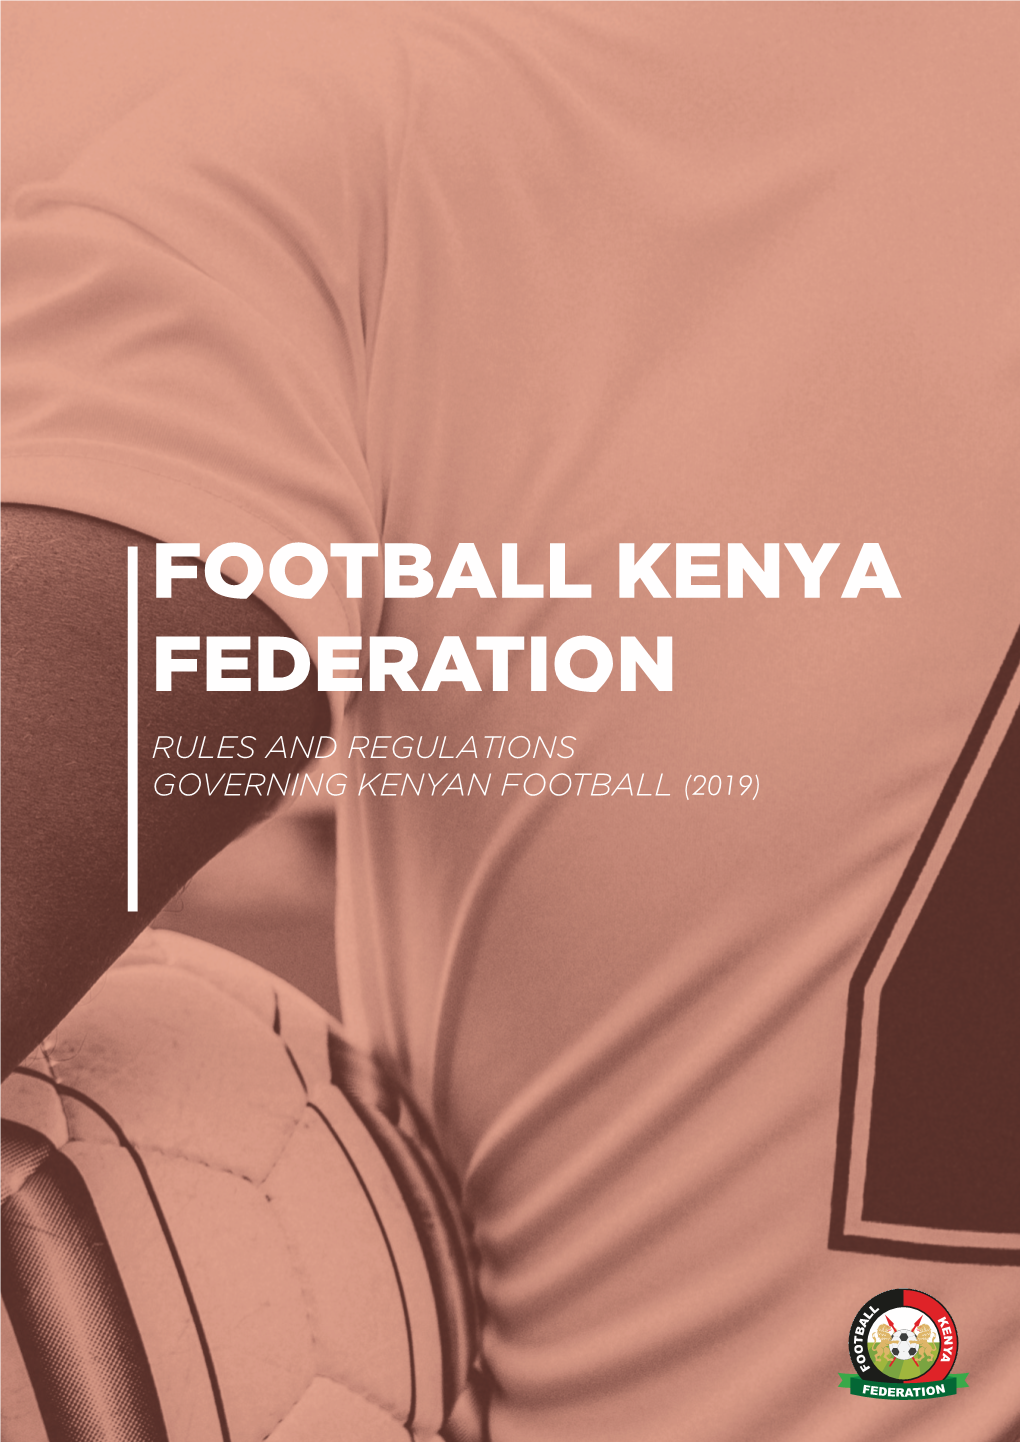 Rules and Regulations Governing Kenyan Football (2019)